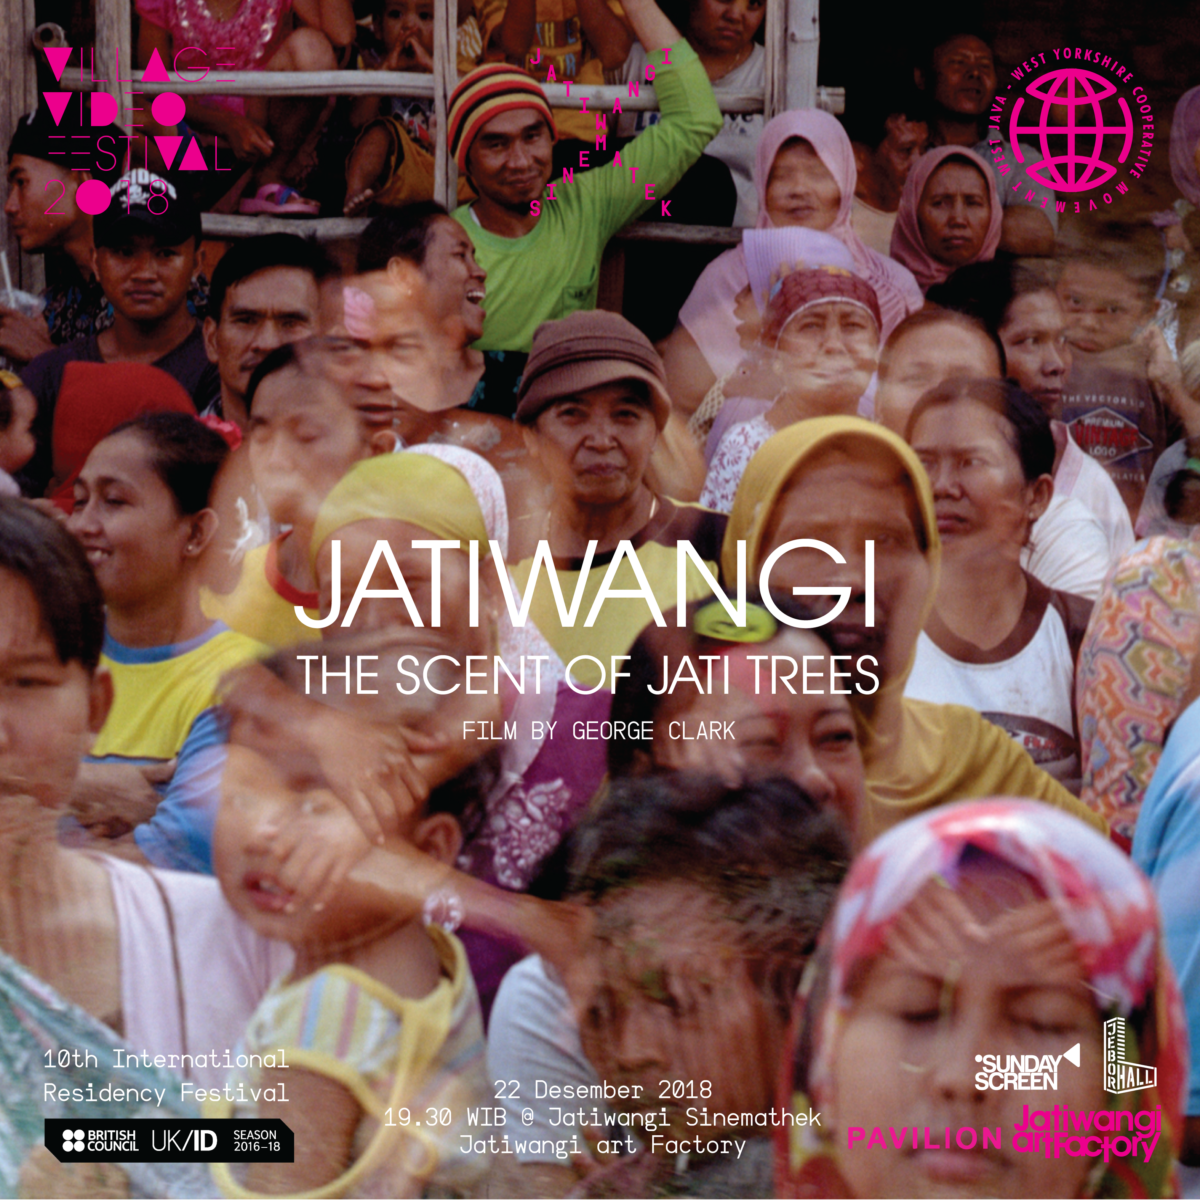 Jatiwangi The Scent of Jati Trees – Indonesian premiere – Dec 2018